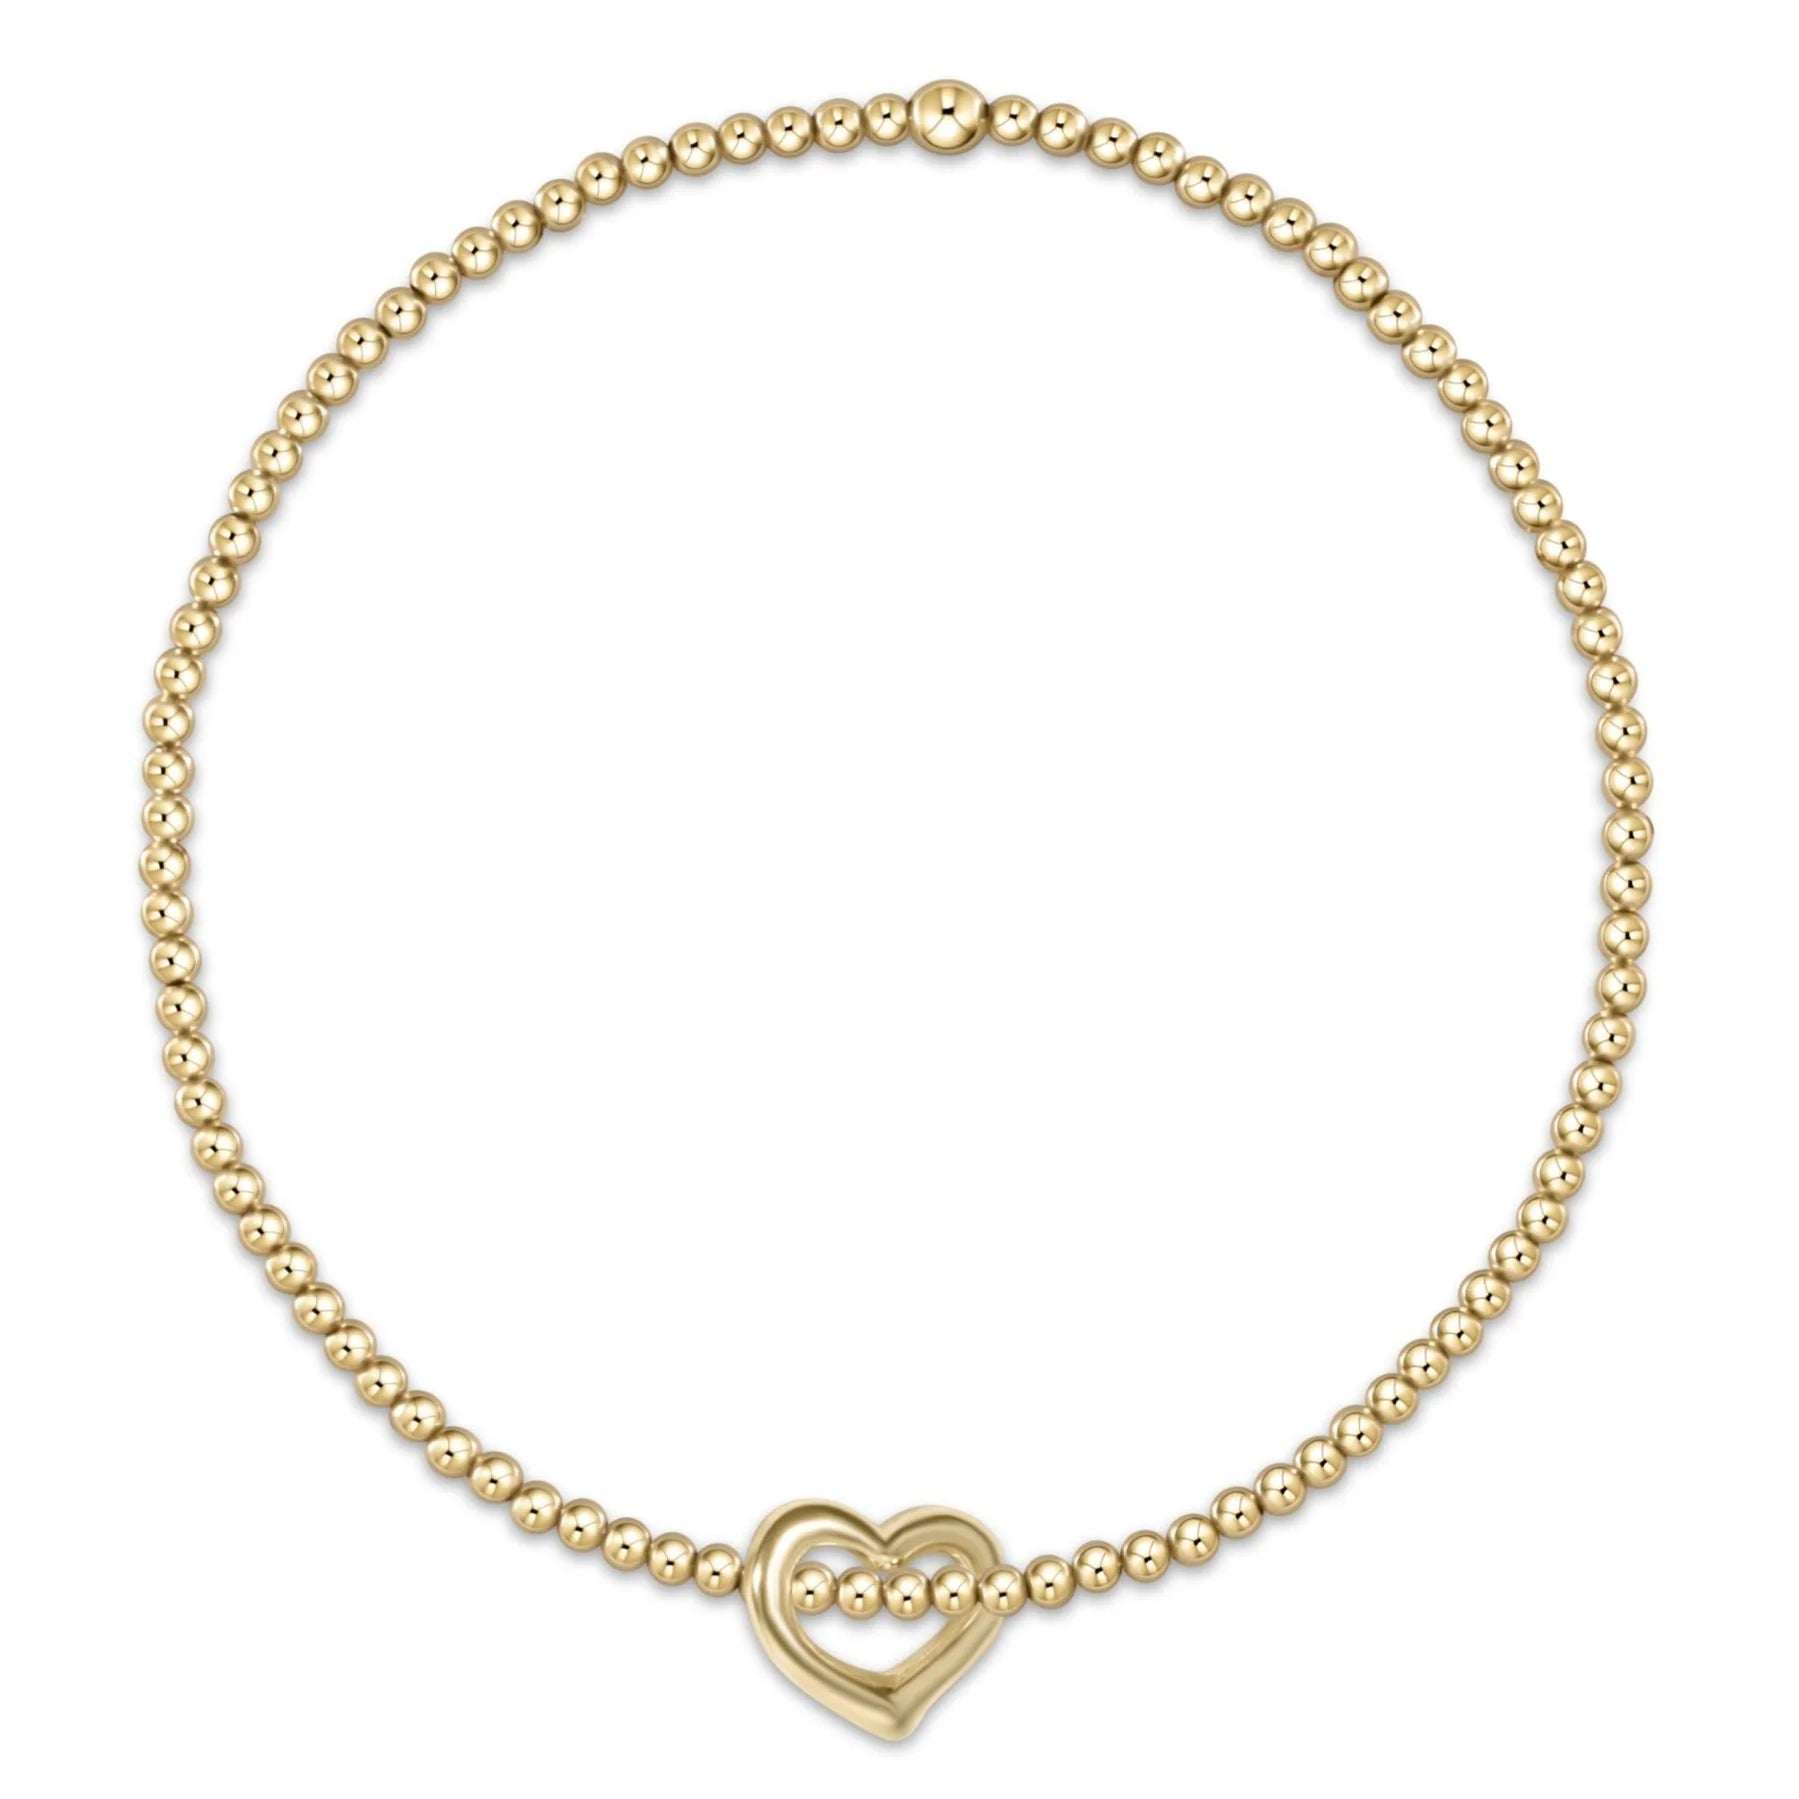 egirl classic gold 2mm bead bracelet - love charm